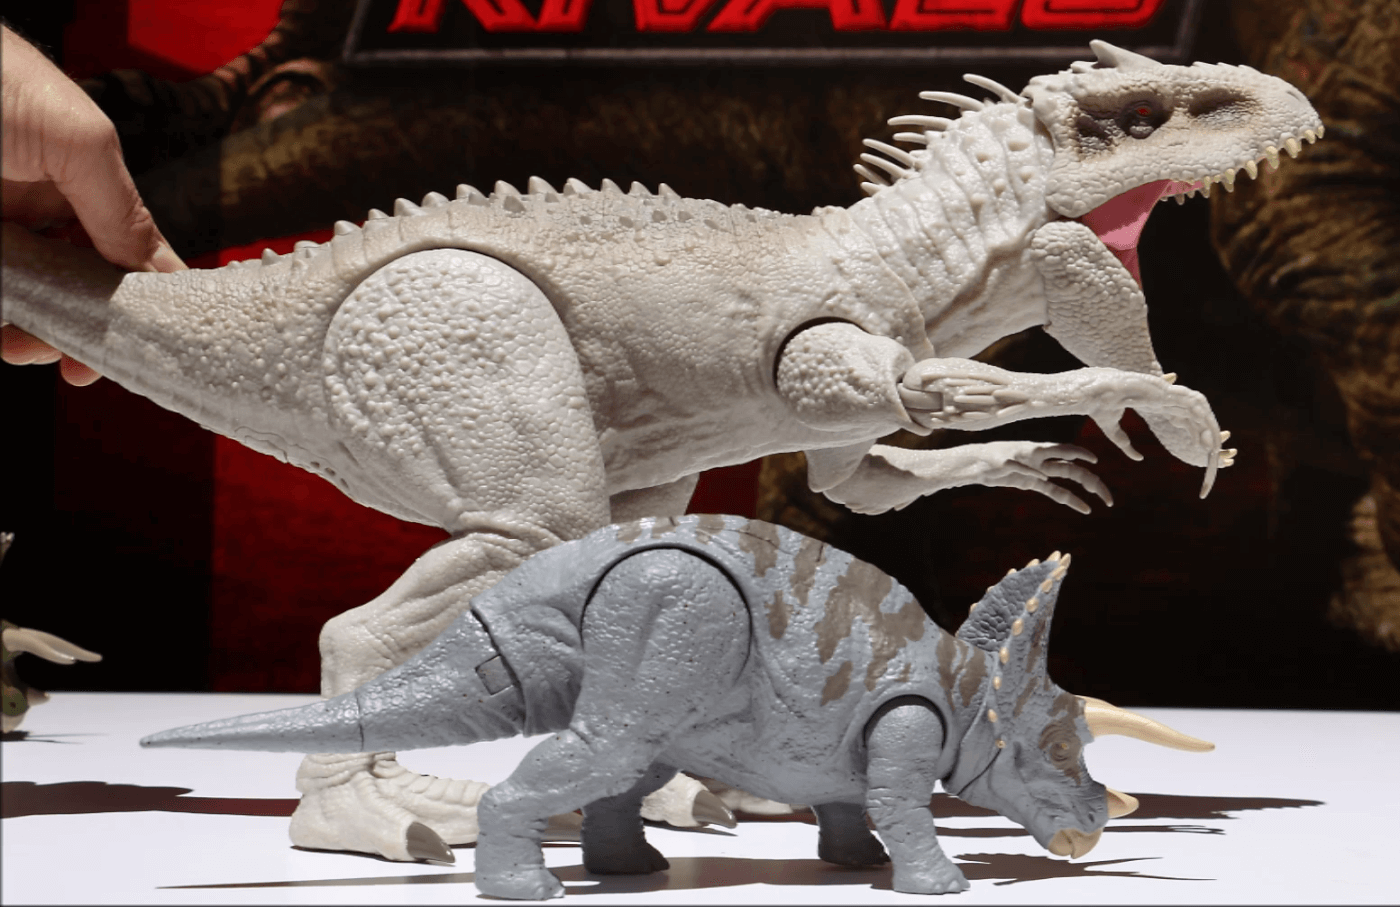 Toy Fair 2019 Mattel S Reveals Jurassic World Dino Rivals Line